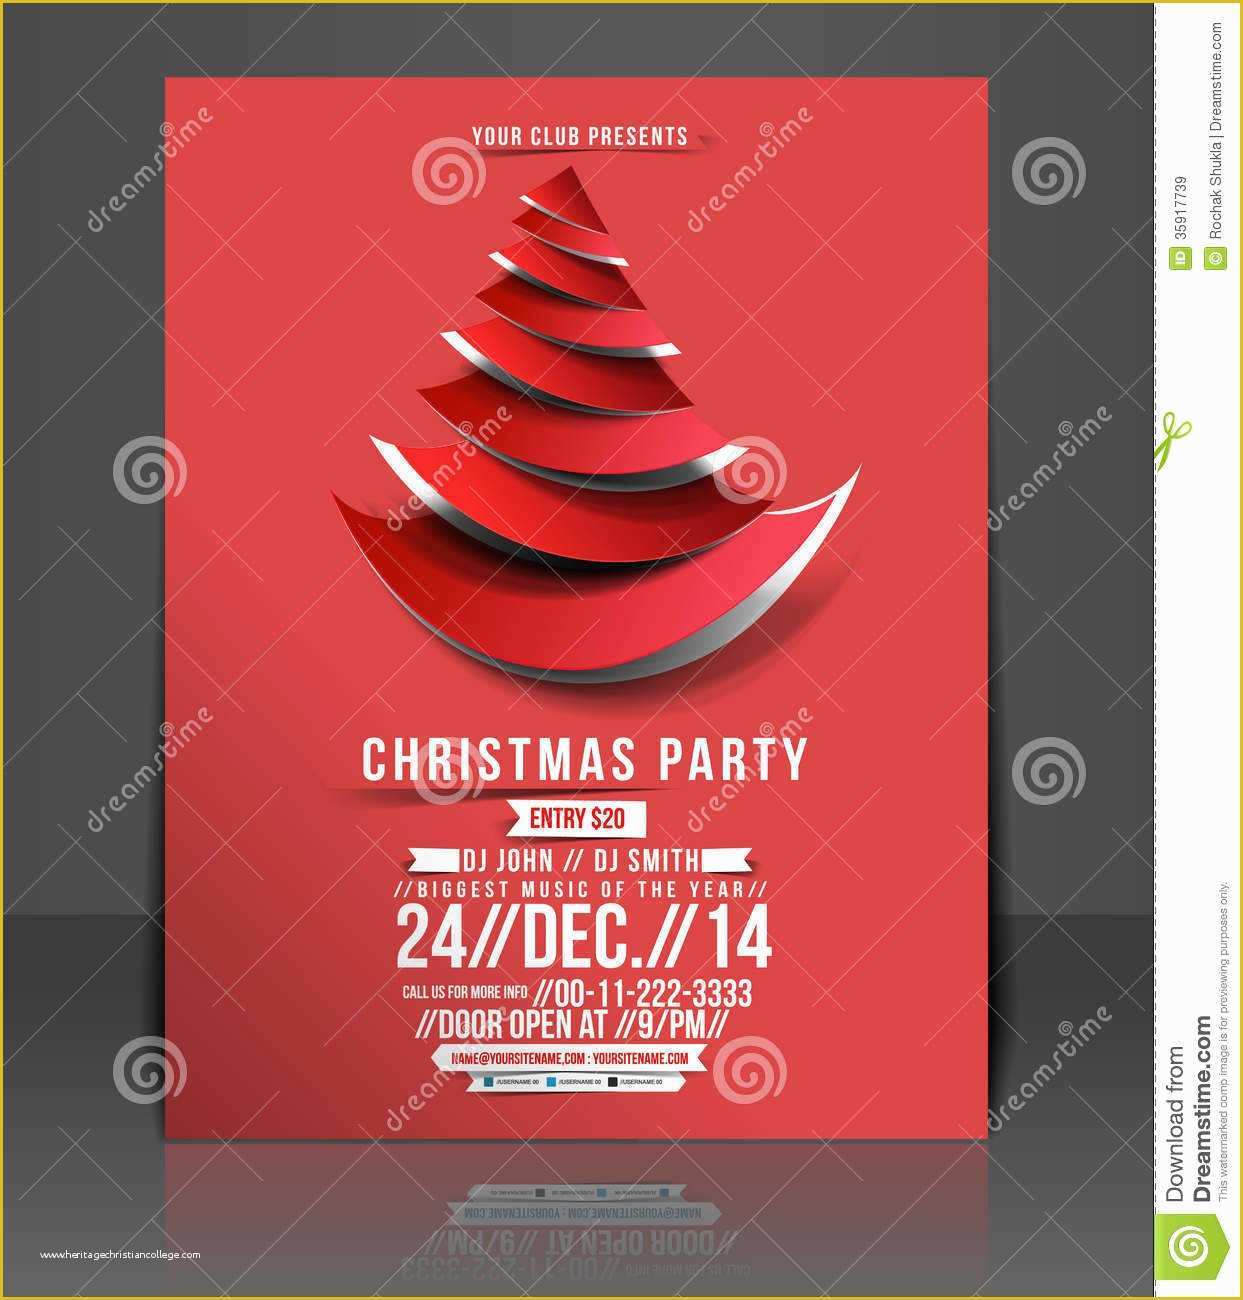 Free Christmas Flyer Templates Microsoft Word Of 6 7 Free Christmas Flyer Templates Word